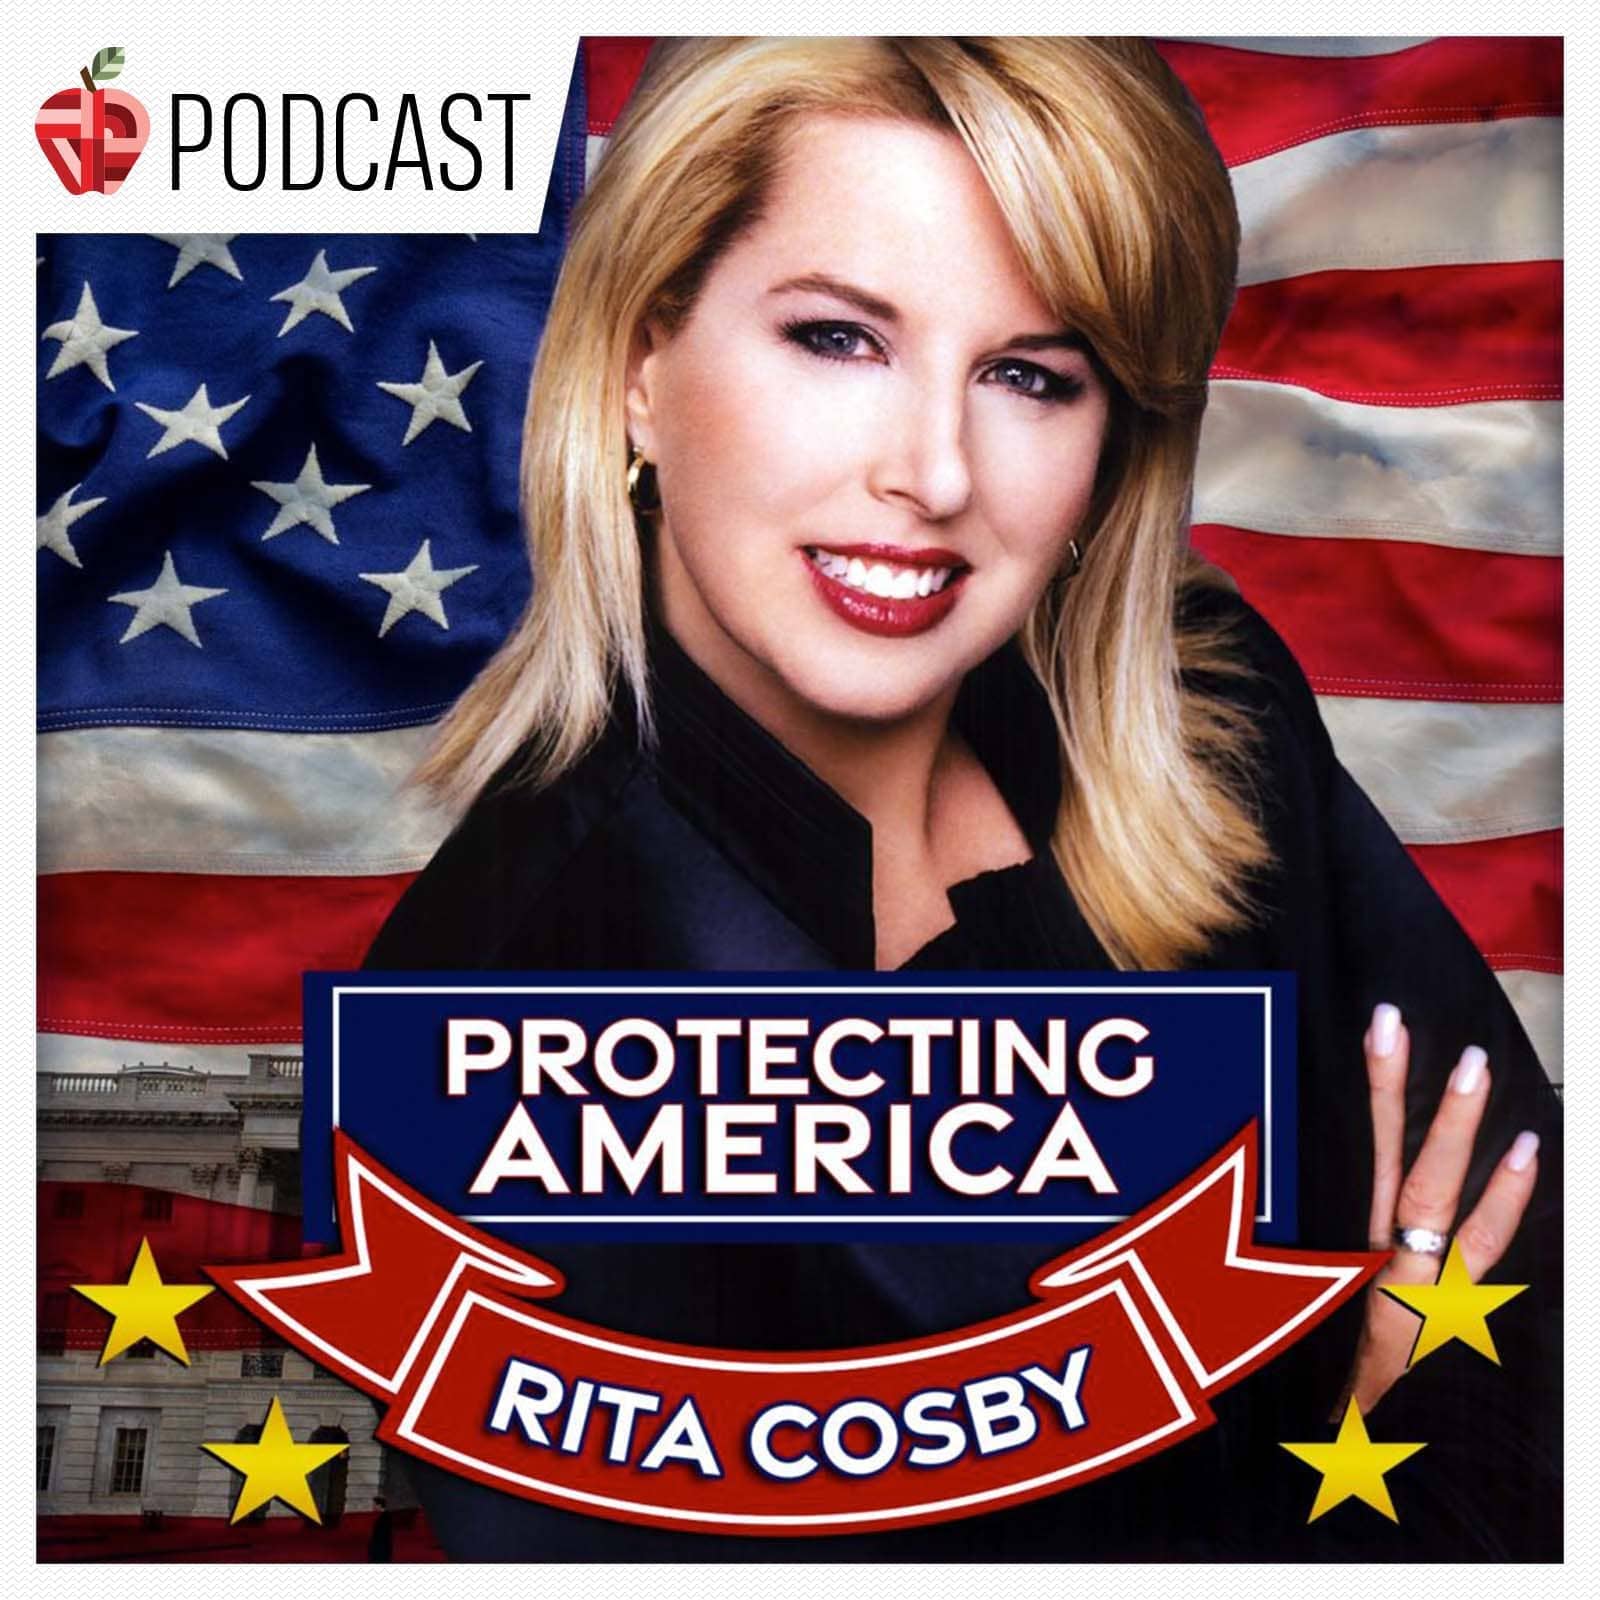 rita-cosby-protecting-america-correct-podcast-new-logo459560